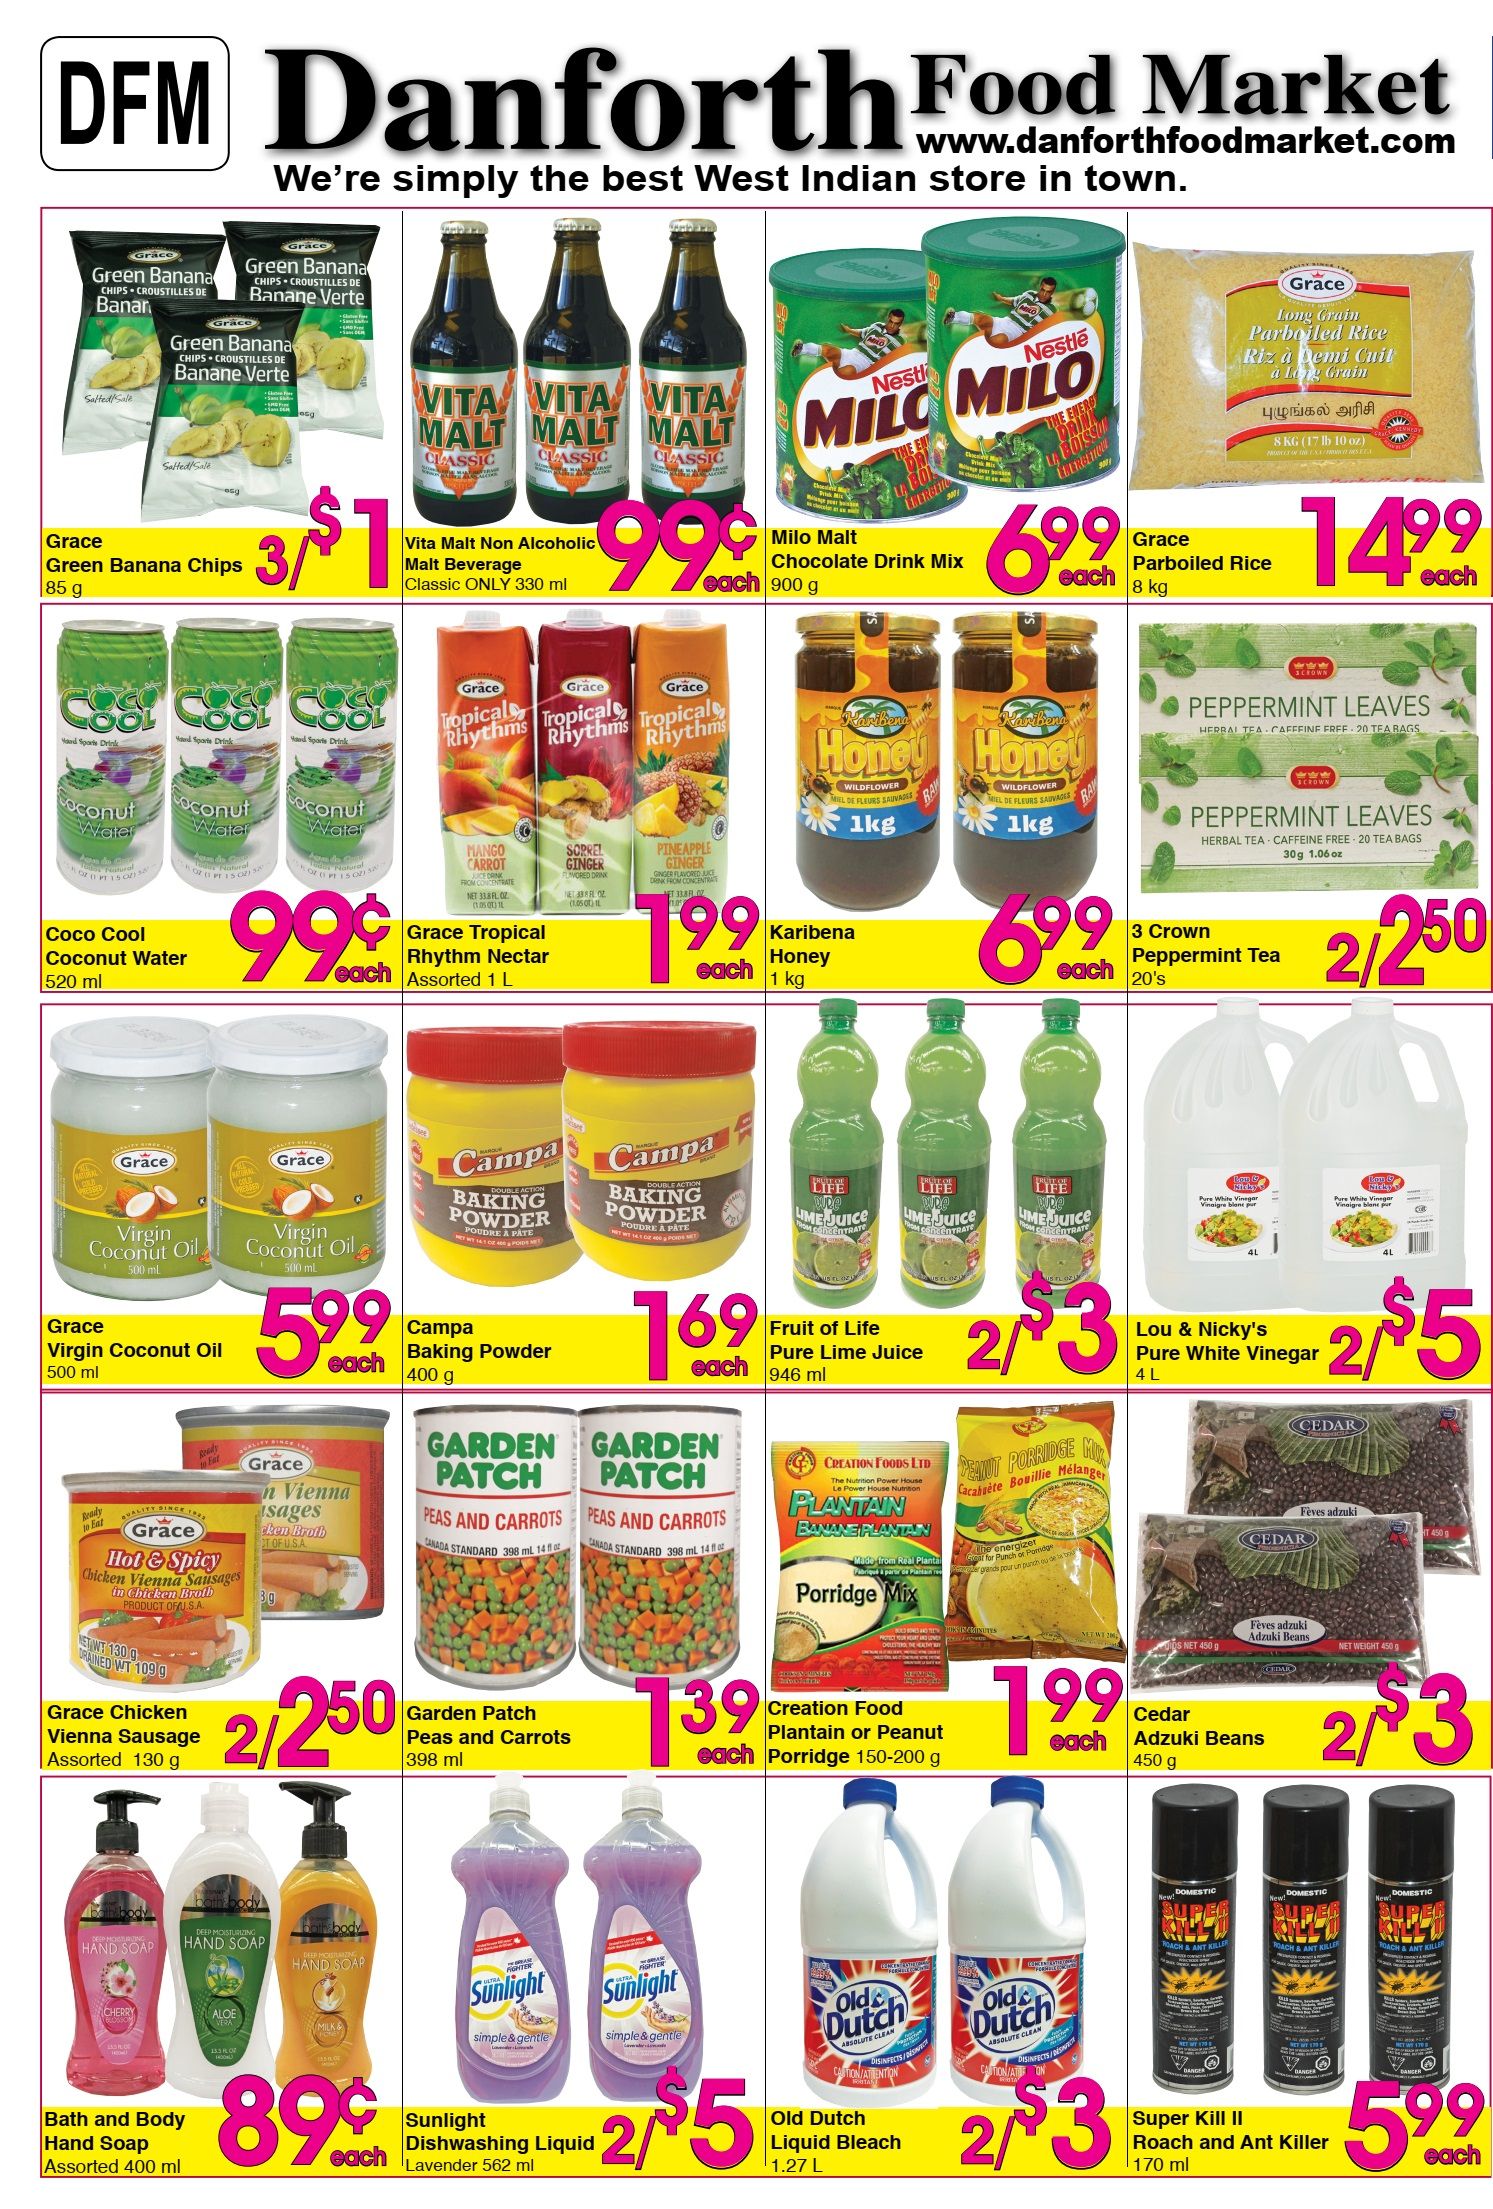 Danforth Food Market - Weekly Flyer Specials